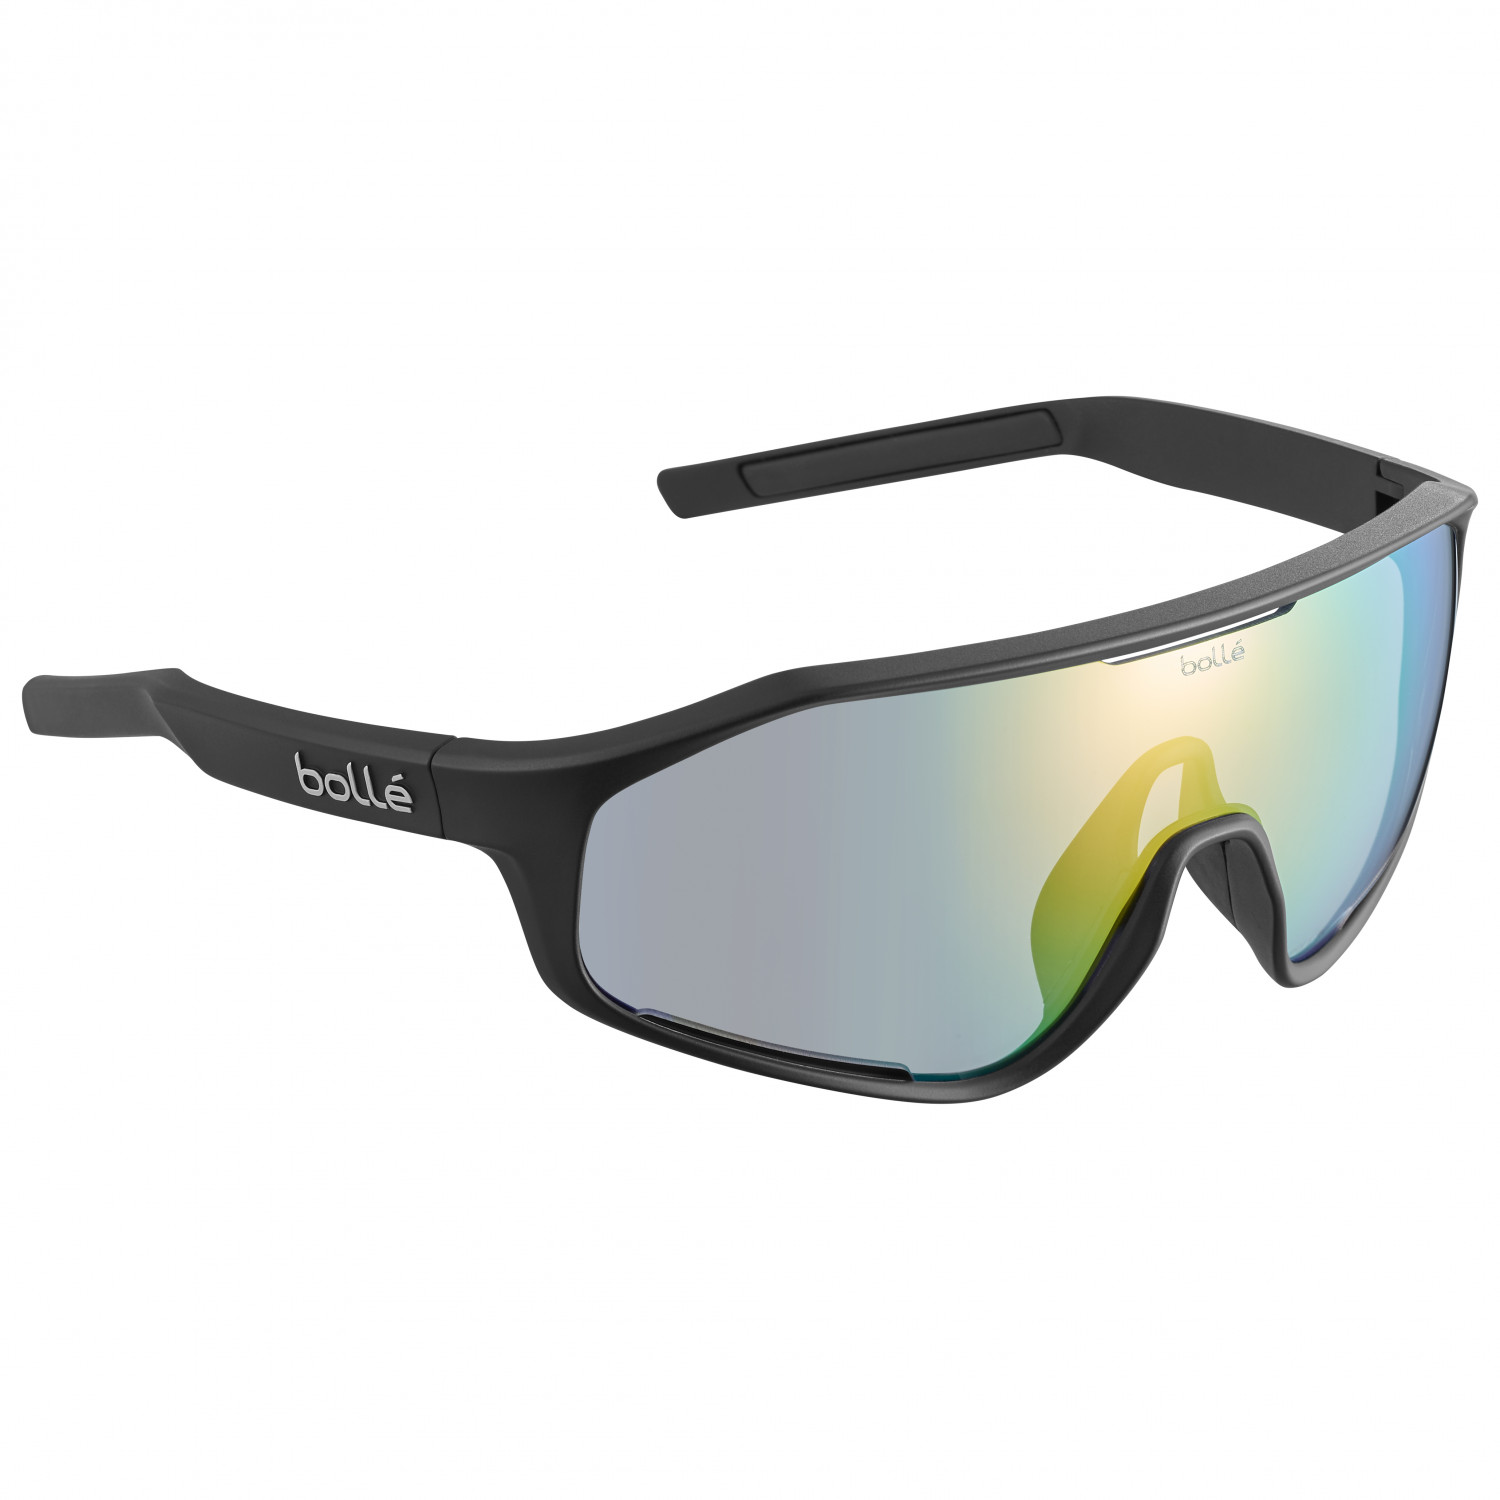 Велосипедные очки Bollé Shifter Photochromic S1 3 (VLT 62 9%), цвет Black Matte